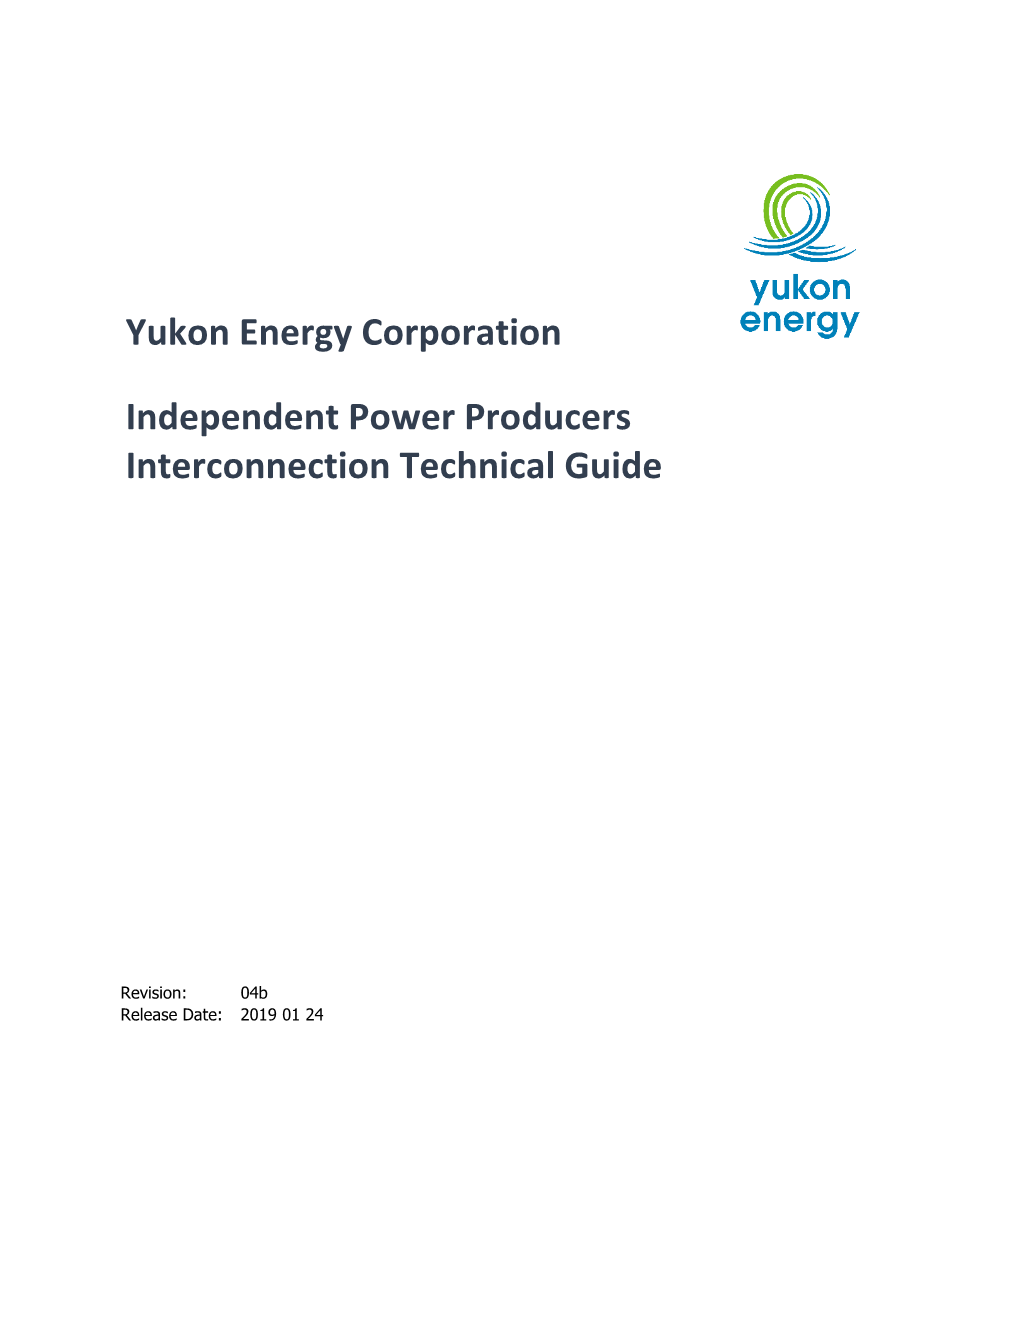 Yukon Energy Corporation Independent Power Producers